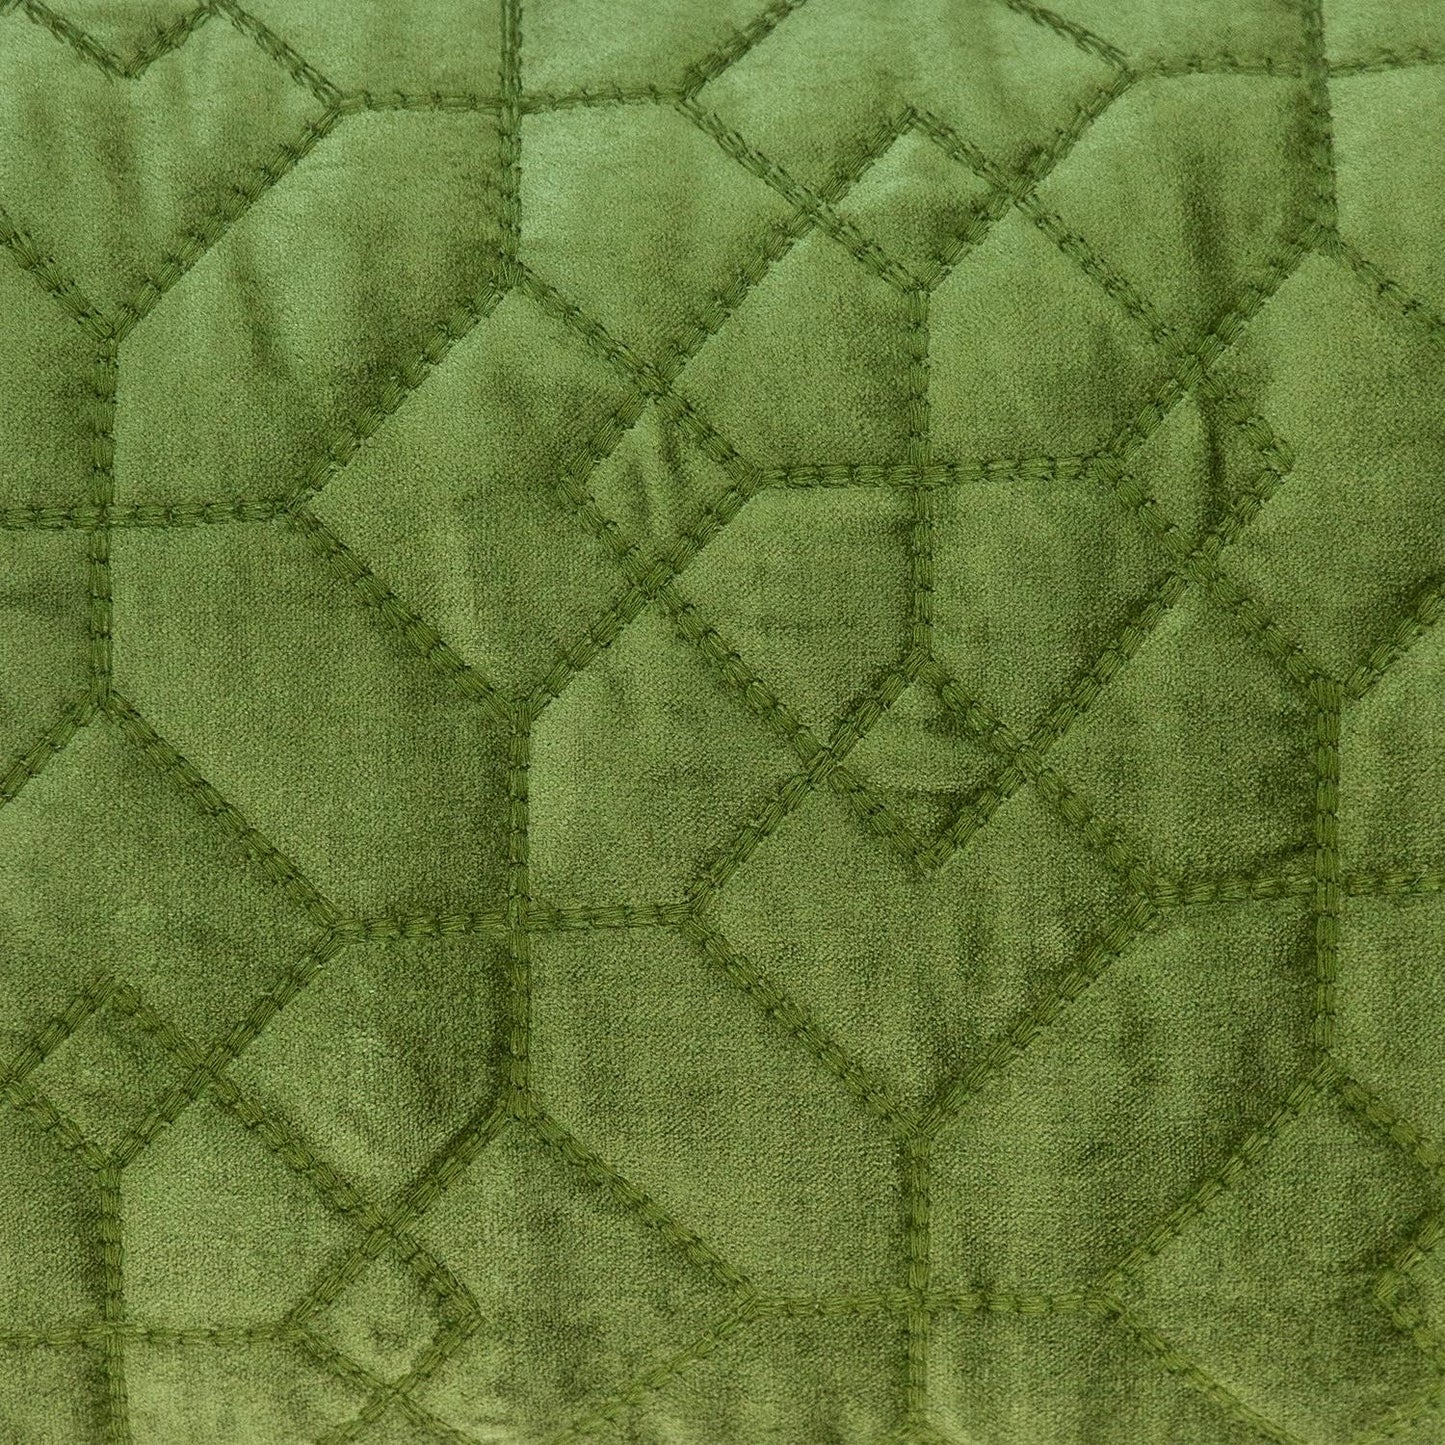 Olive Quilted Velvet Geo Lumbar Decorative Pillow